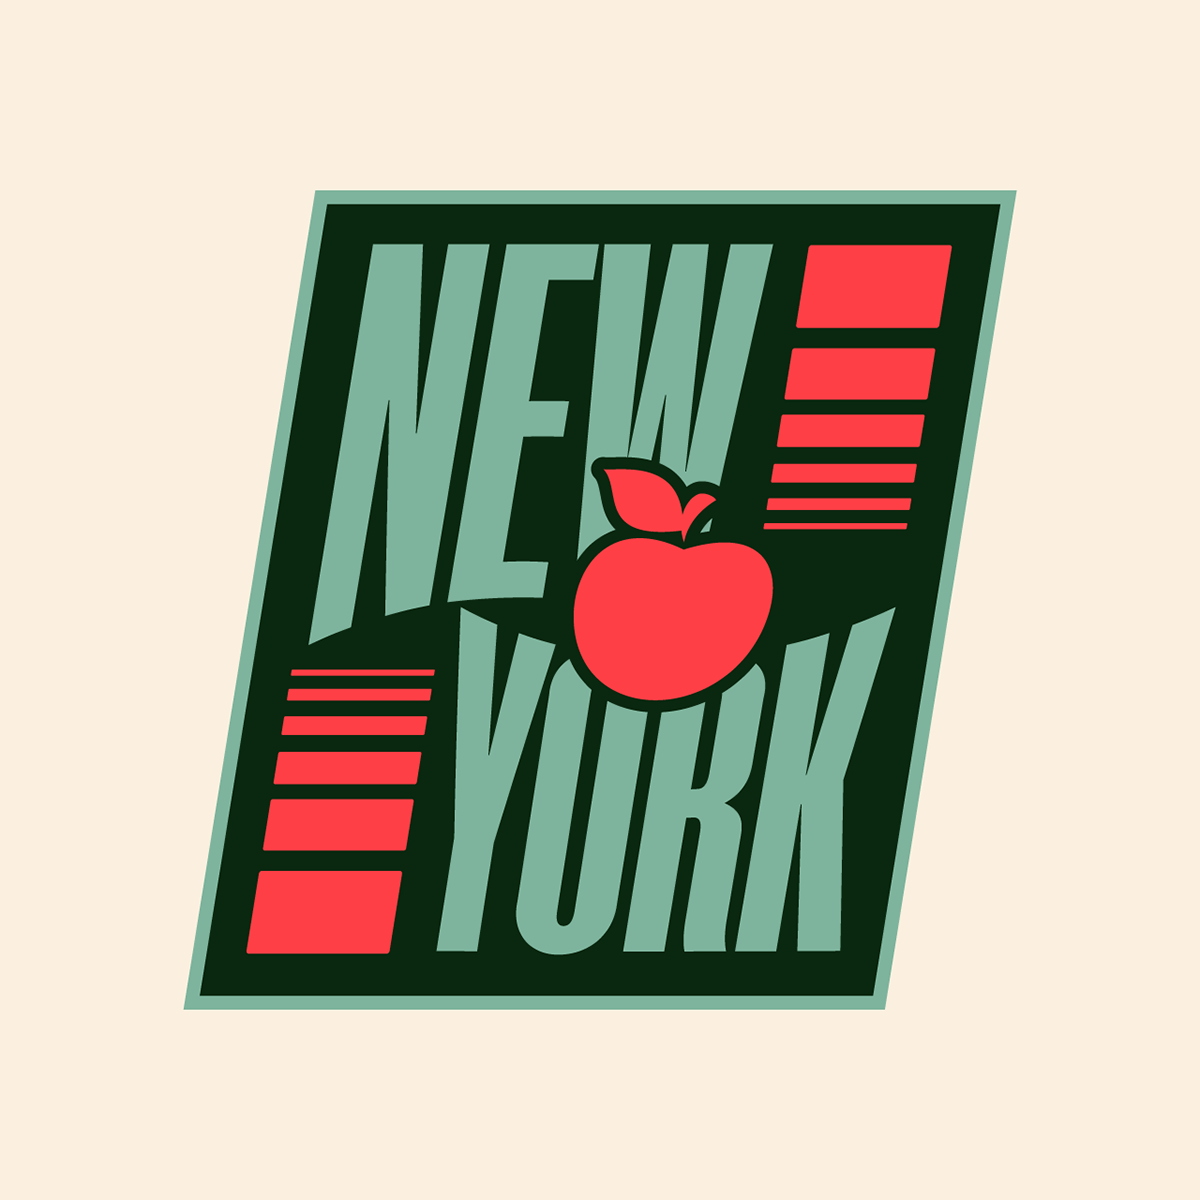 1984 george orwell daft punk google ikea Netflix New York Nike spotify The Oscars TMNT